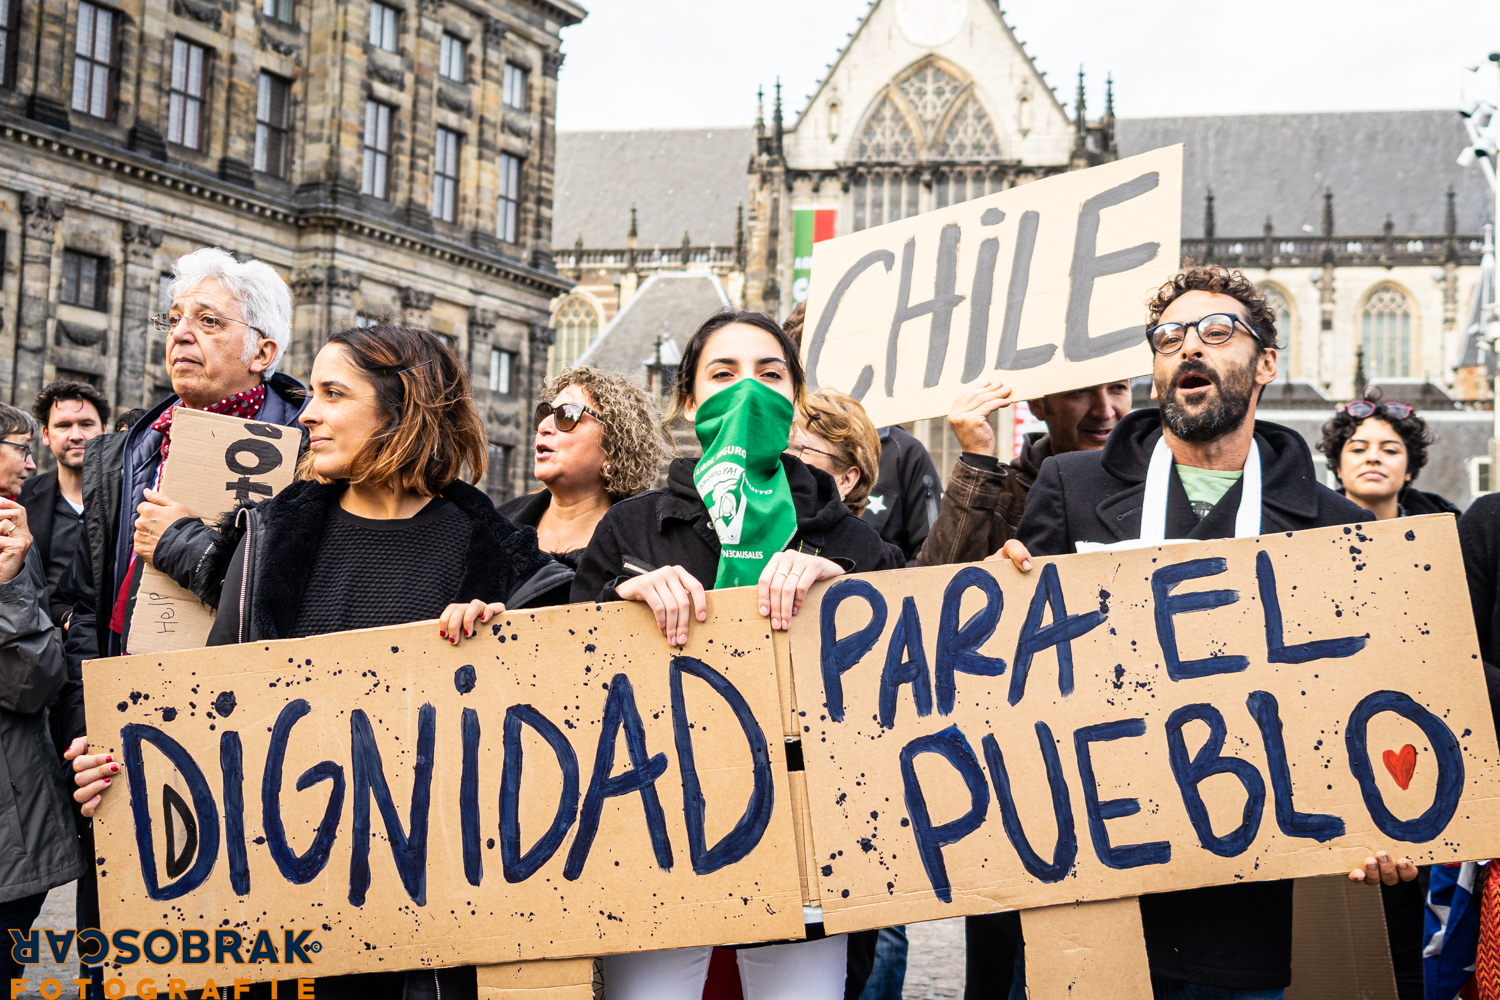 Chile protest Amsterdam Oscar Brak Fotografie